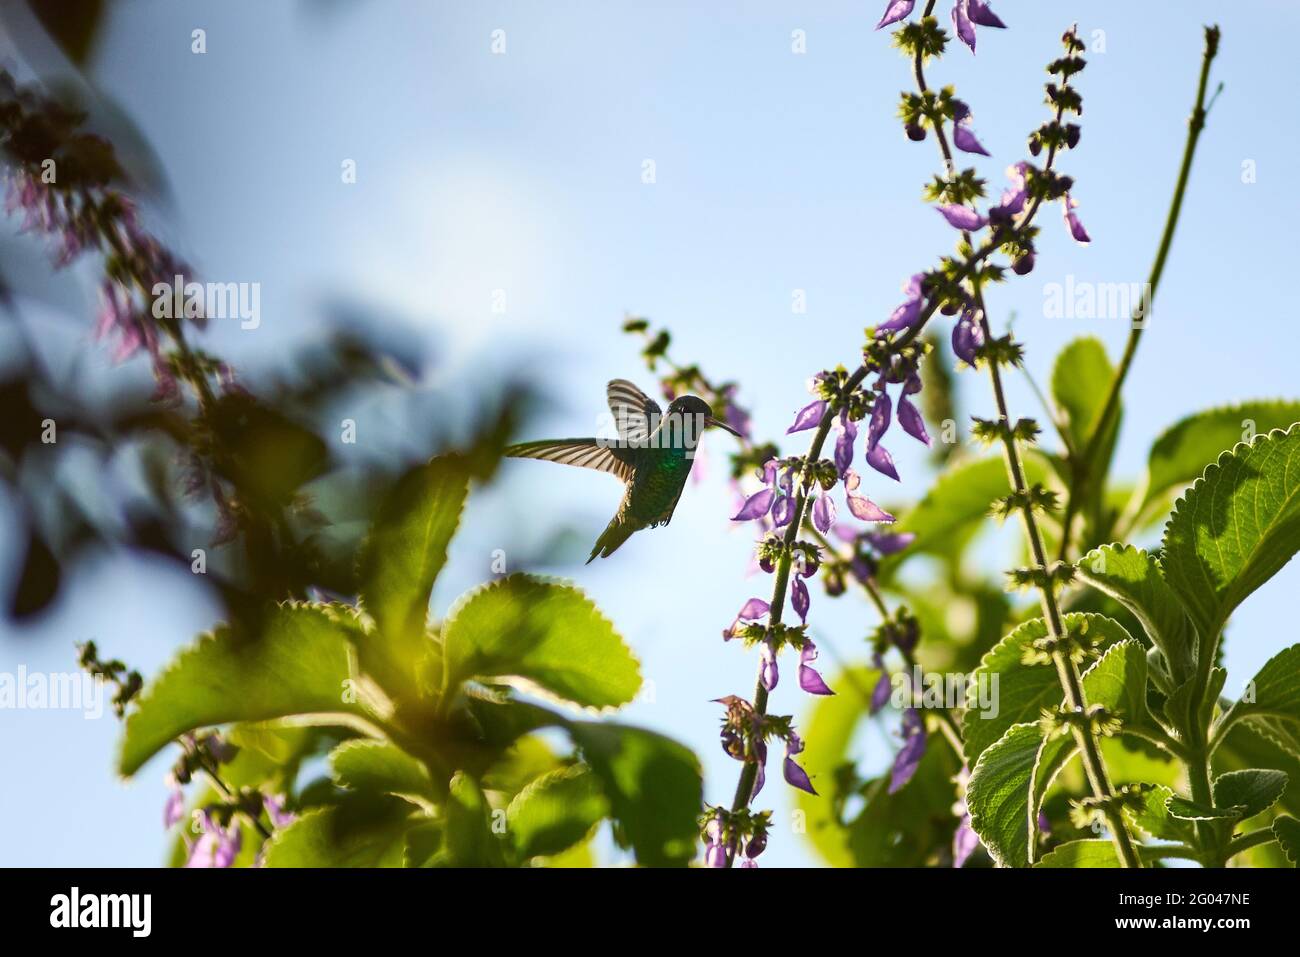 Rio Claro, Sao Paulo, Brazil. 31st May, 2021. Hummingbird seen feeding on the flowers of a garden in Rio Claro, Sao Paulo, Brazil, on May 31, 2021. Credit: Igor Do Vale/ZUMA Wire/Alamy Live News Stock Photo